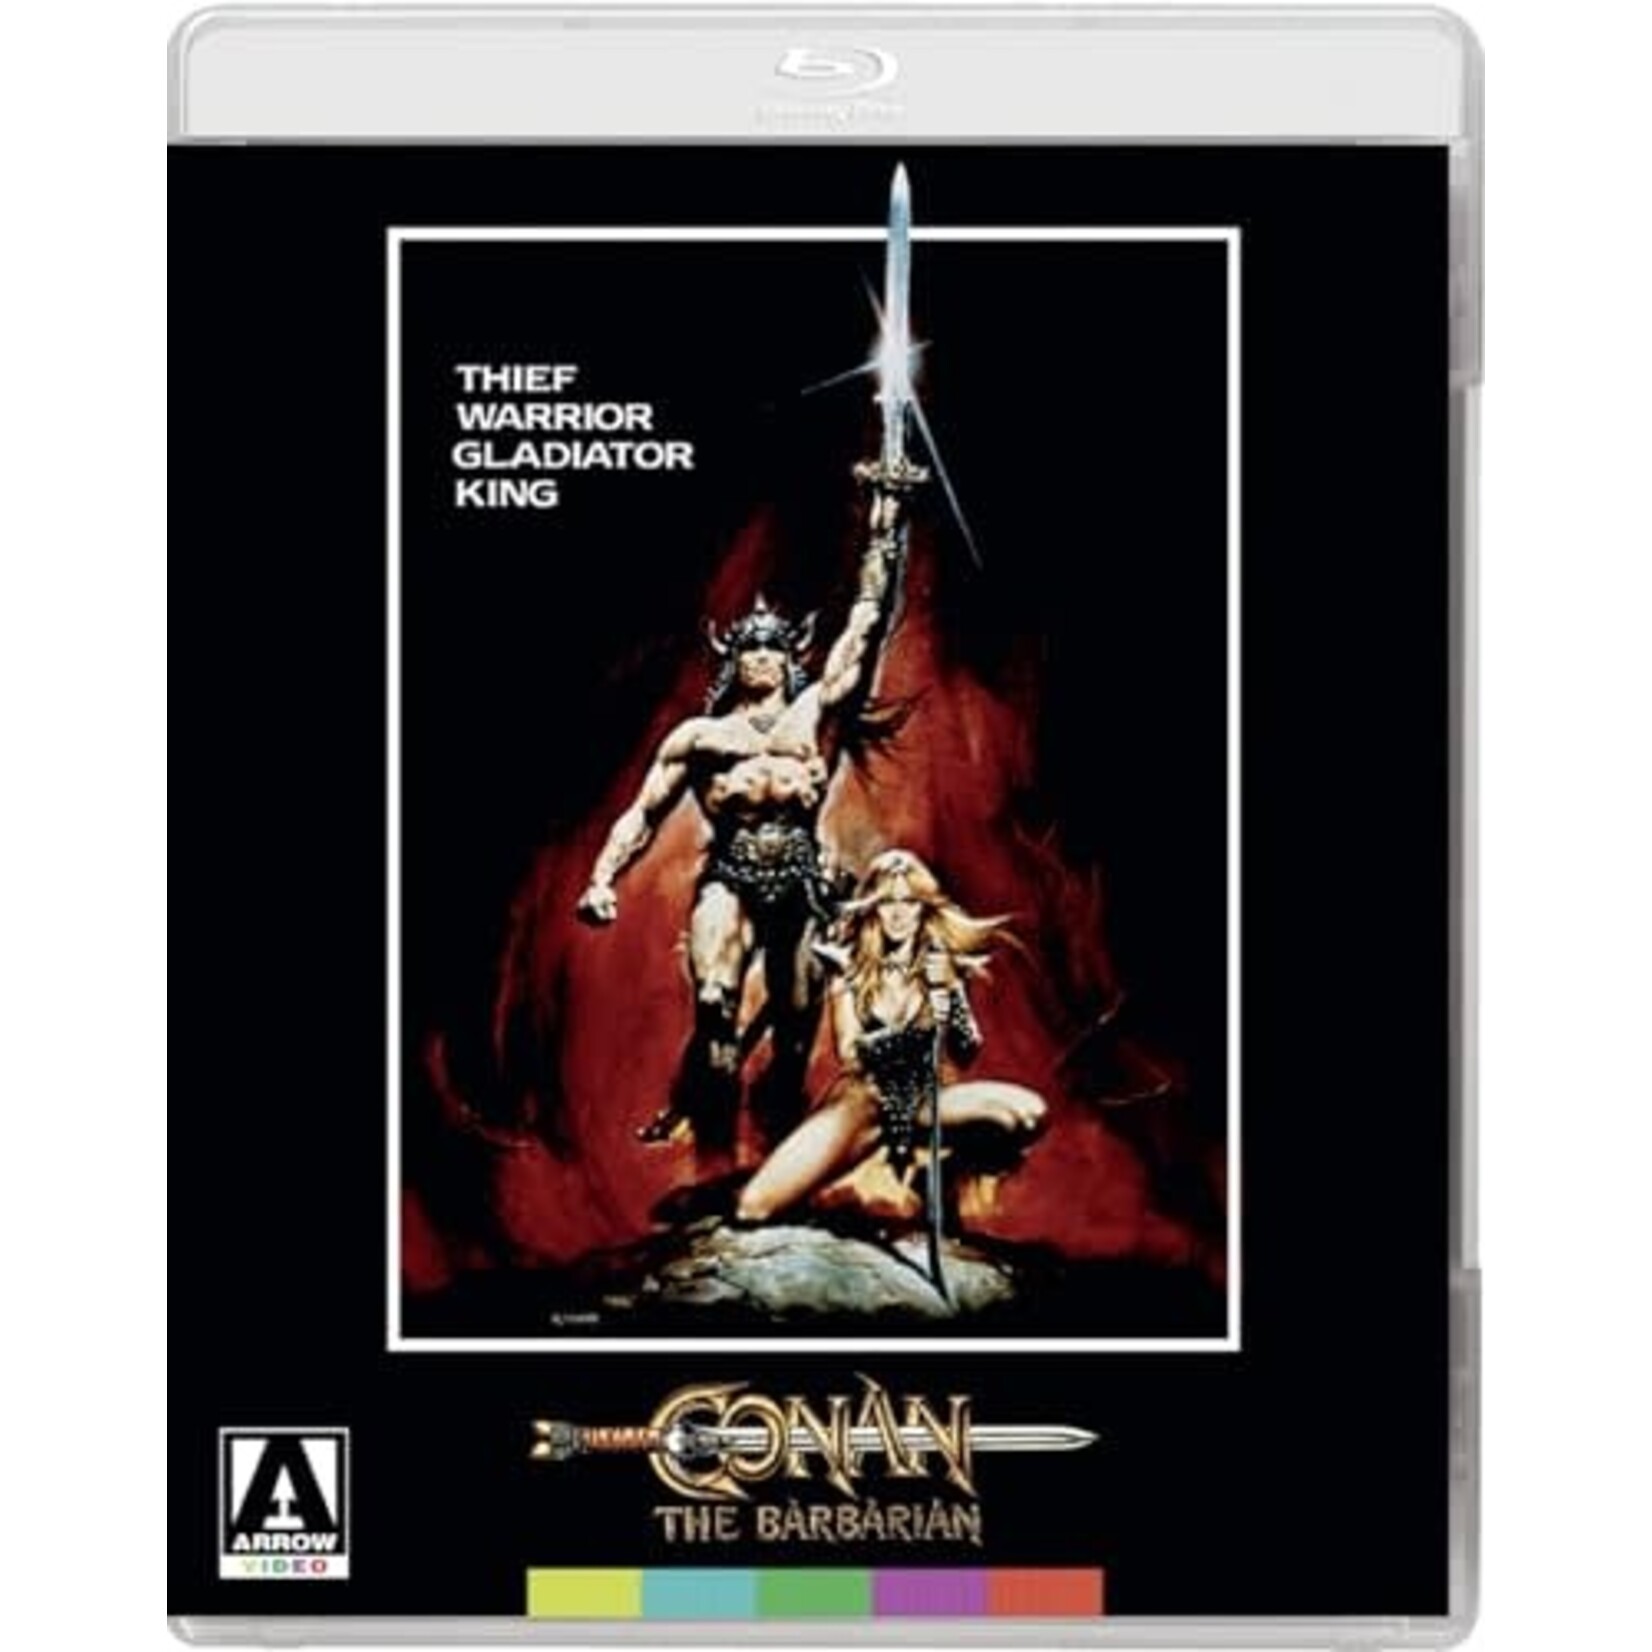 Conan The Barbarian (1982) [BRD]